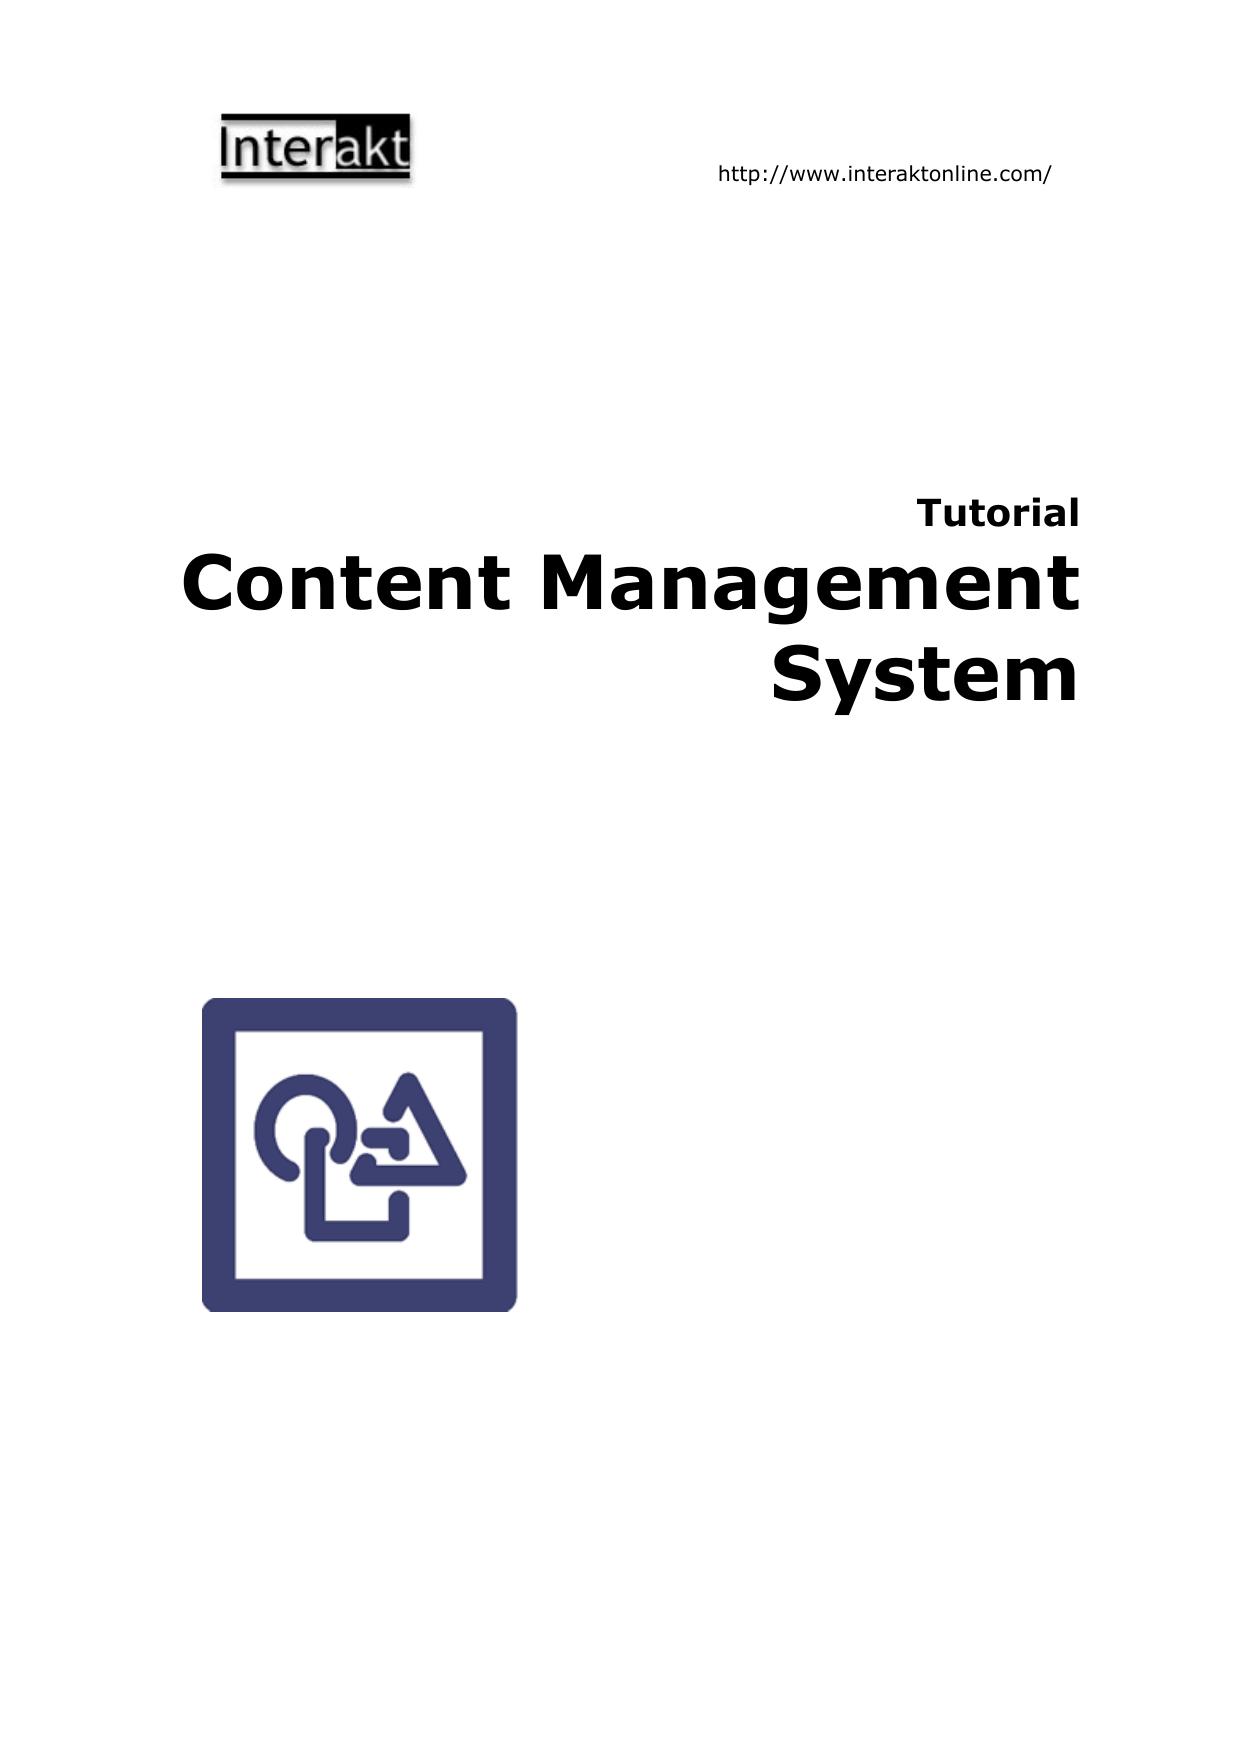 Tutorial: Content Management System